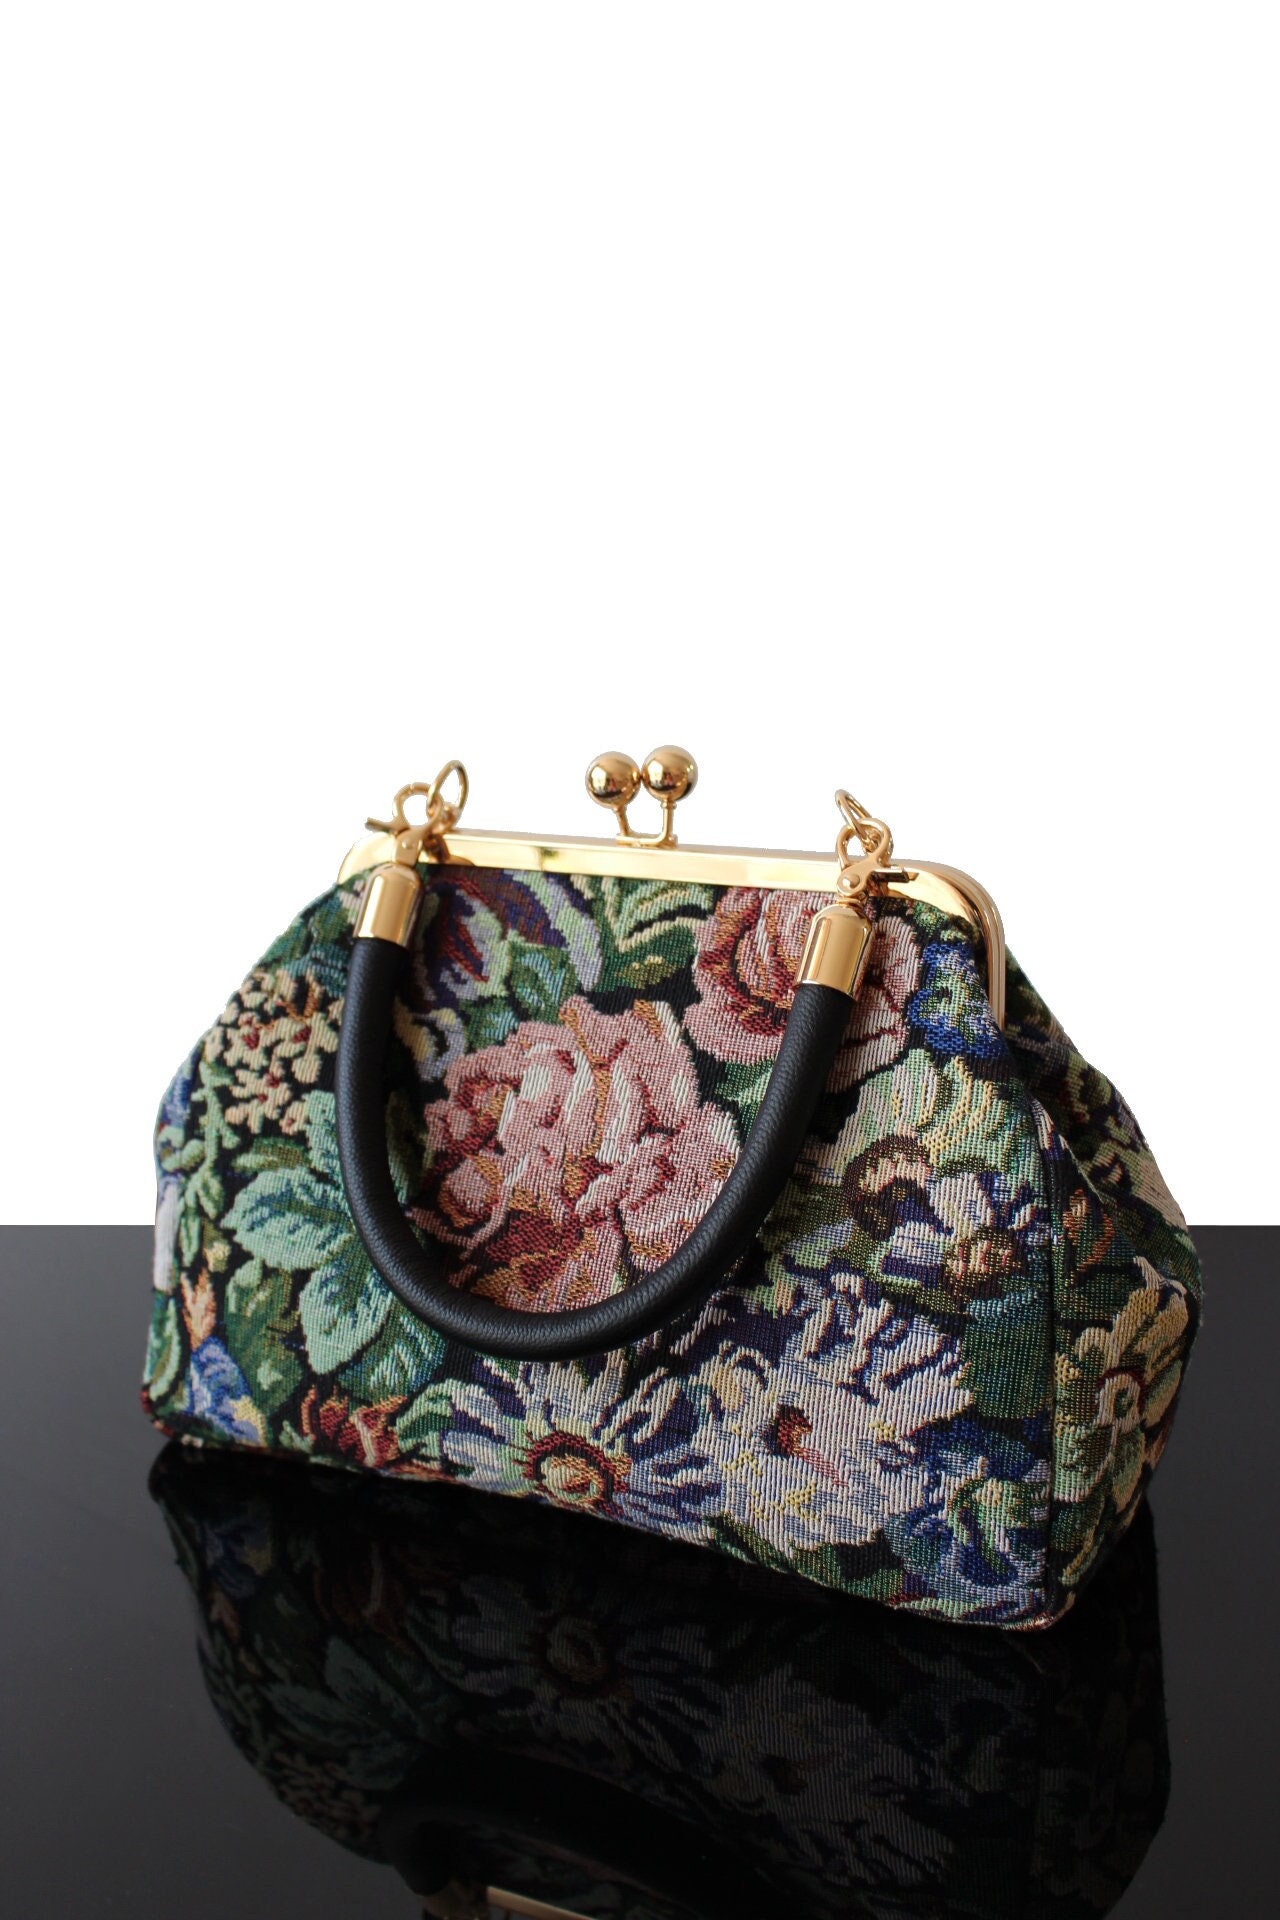 Signare Tapestry Crossbody Purse Small Shoulder Bag for Women with Mexican  Folk Art Design: Handbags